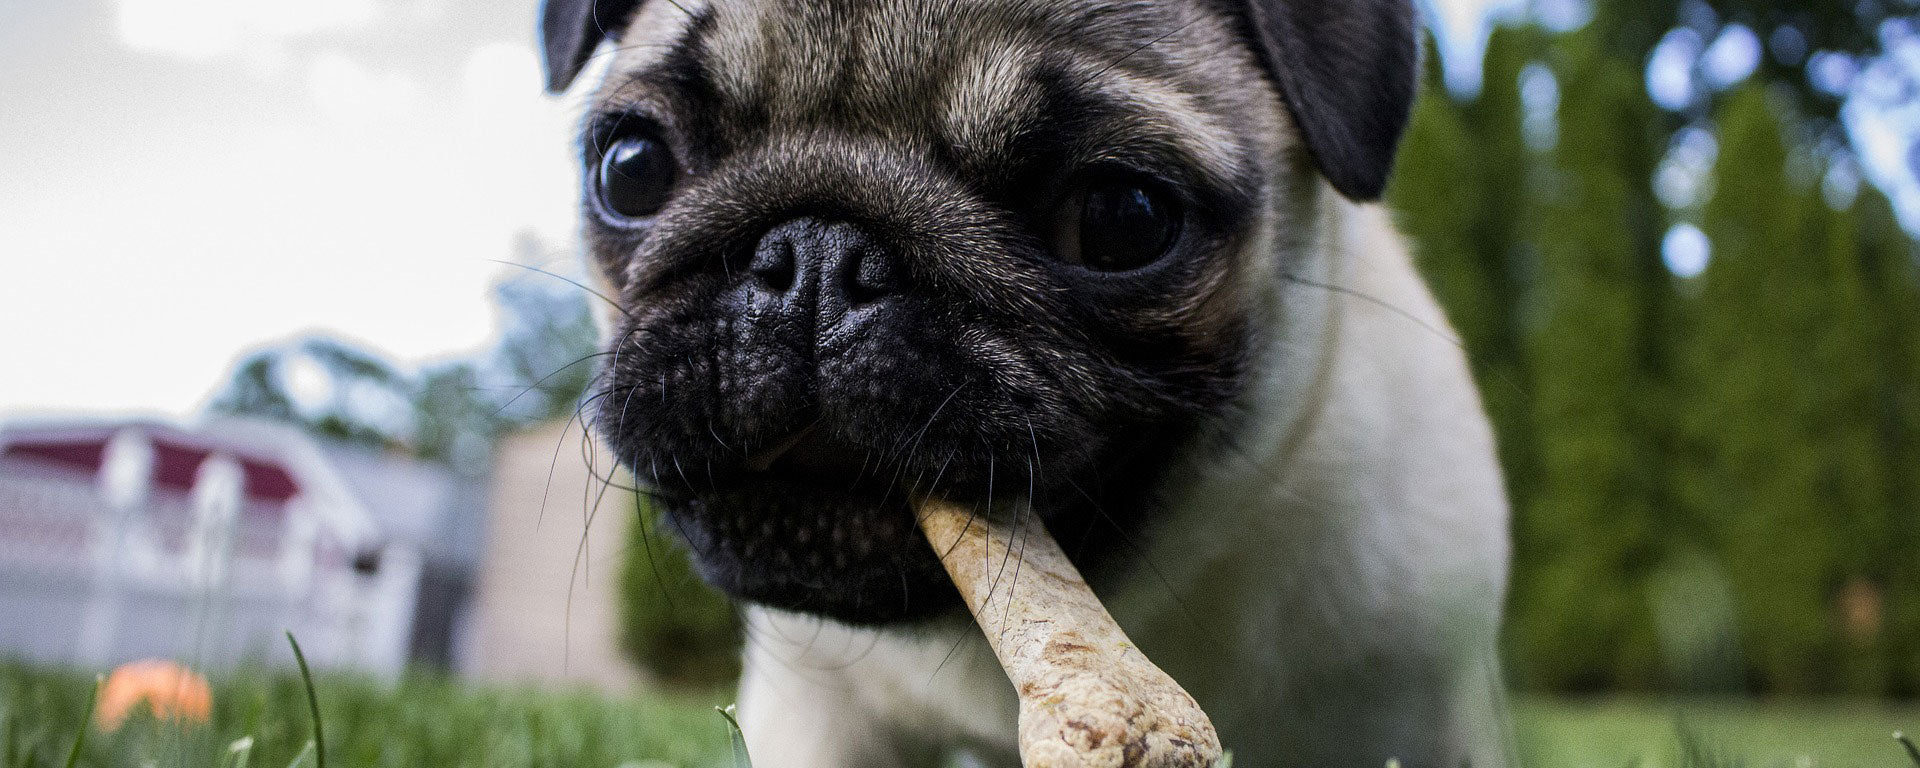 Pug eating a milkbone treat